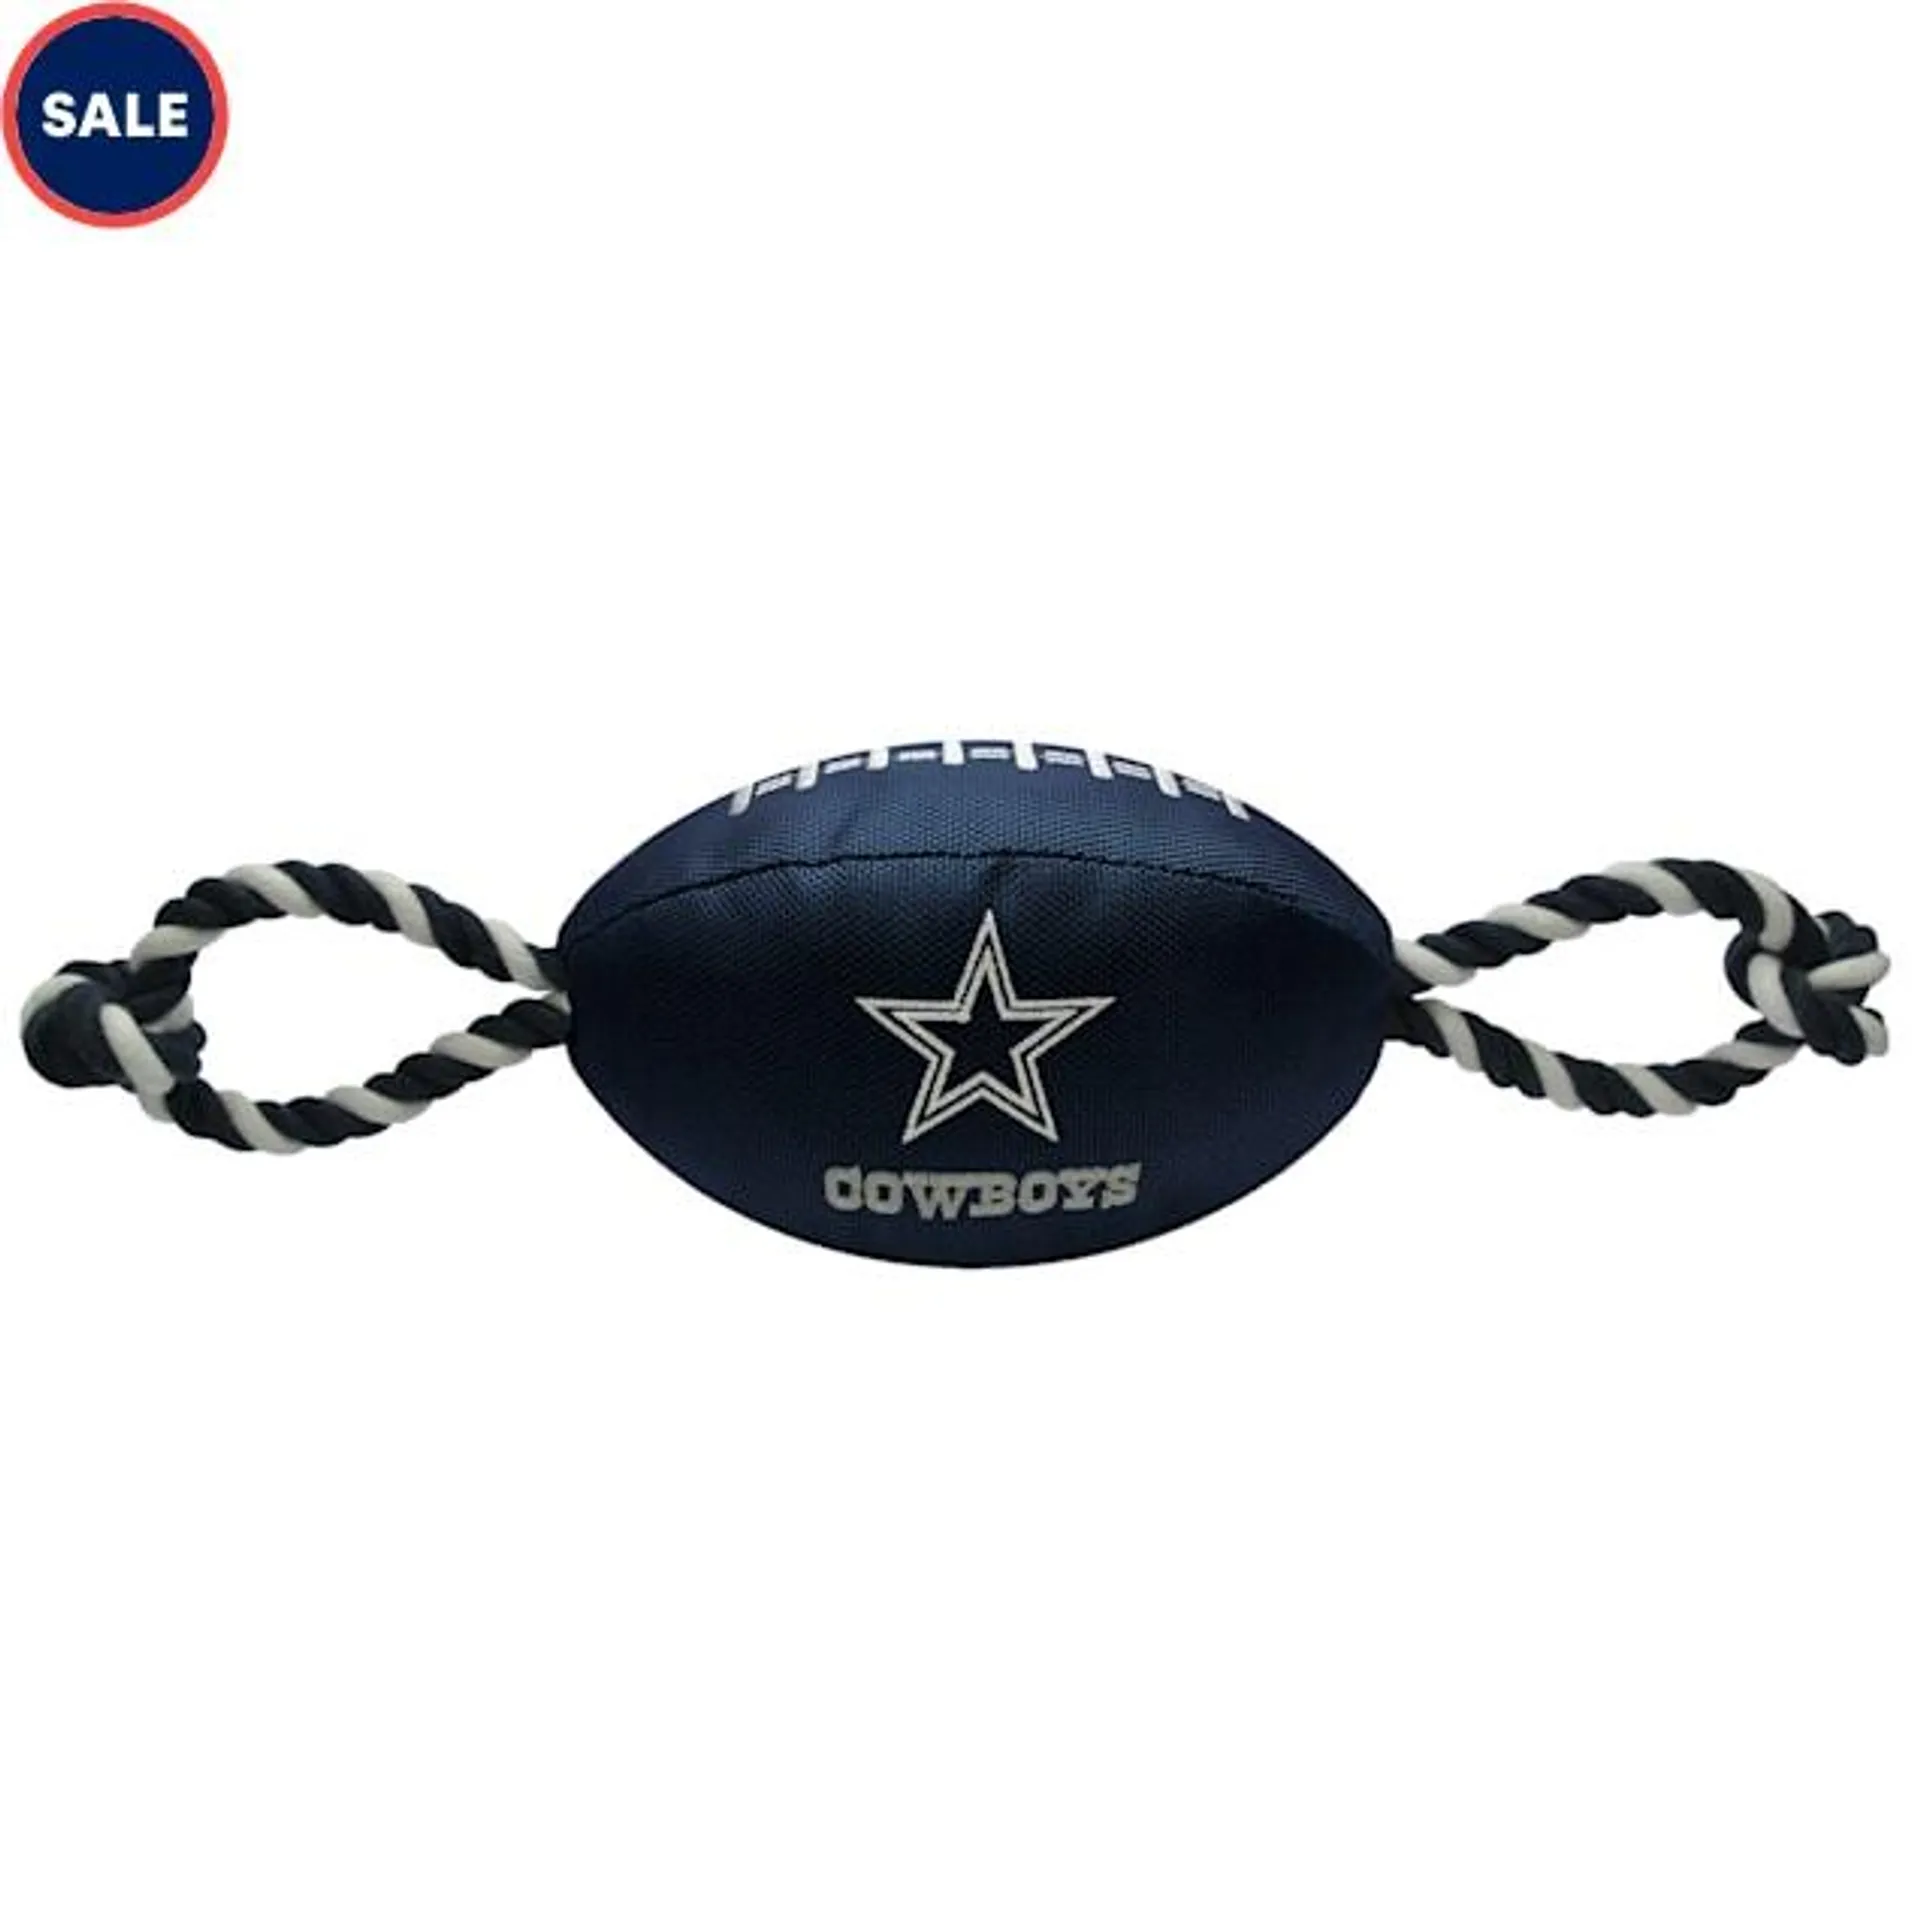 Pets First Dallas Cowboys Football Dog Toy, Medium